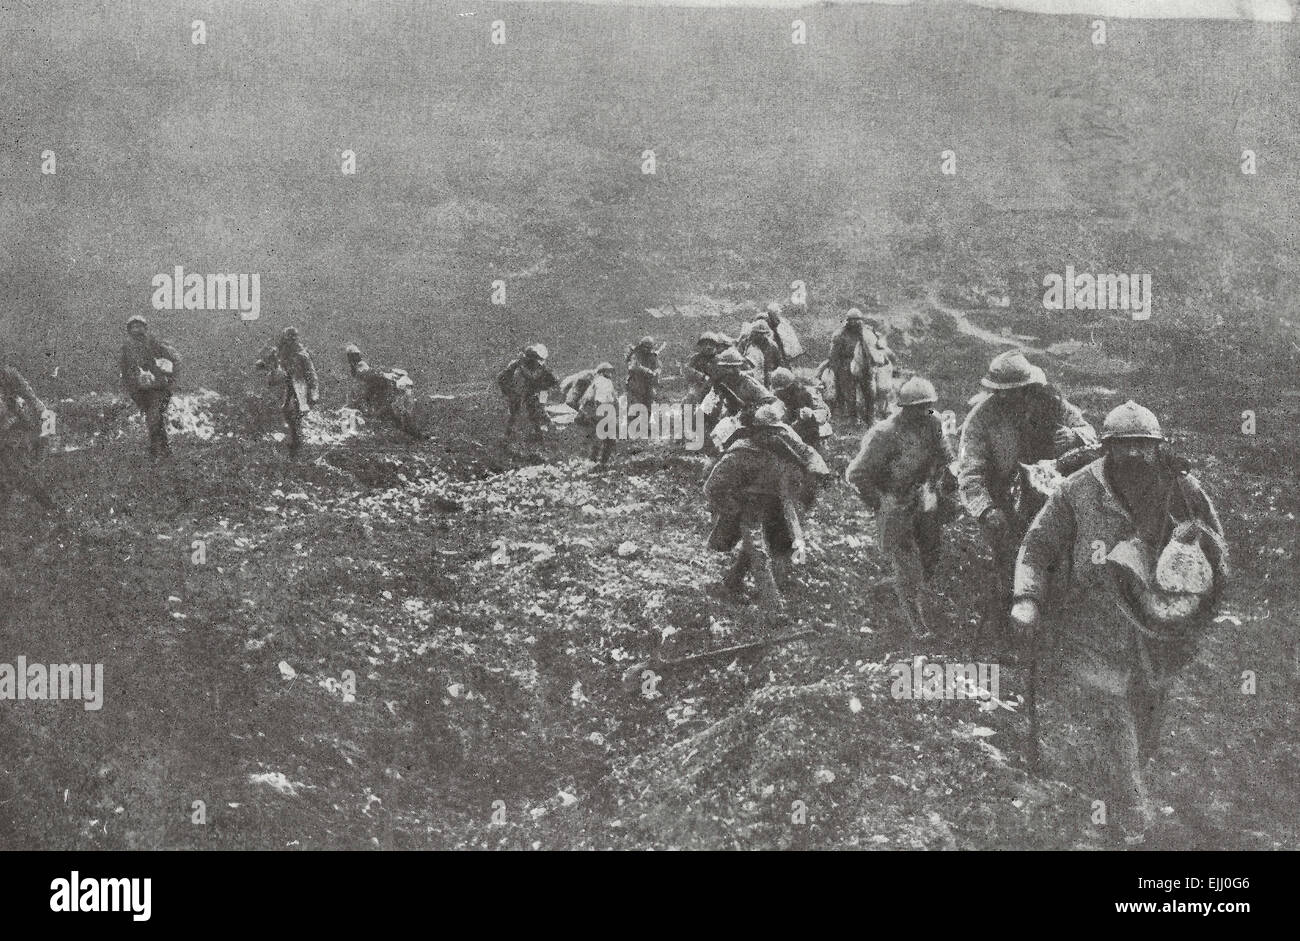 Shells Manufactured in Verdun  Verdun in Wartime: An Engaged Community